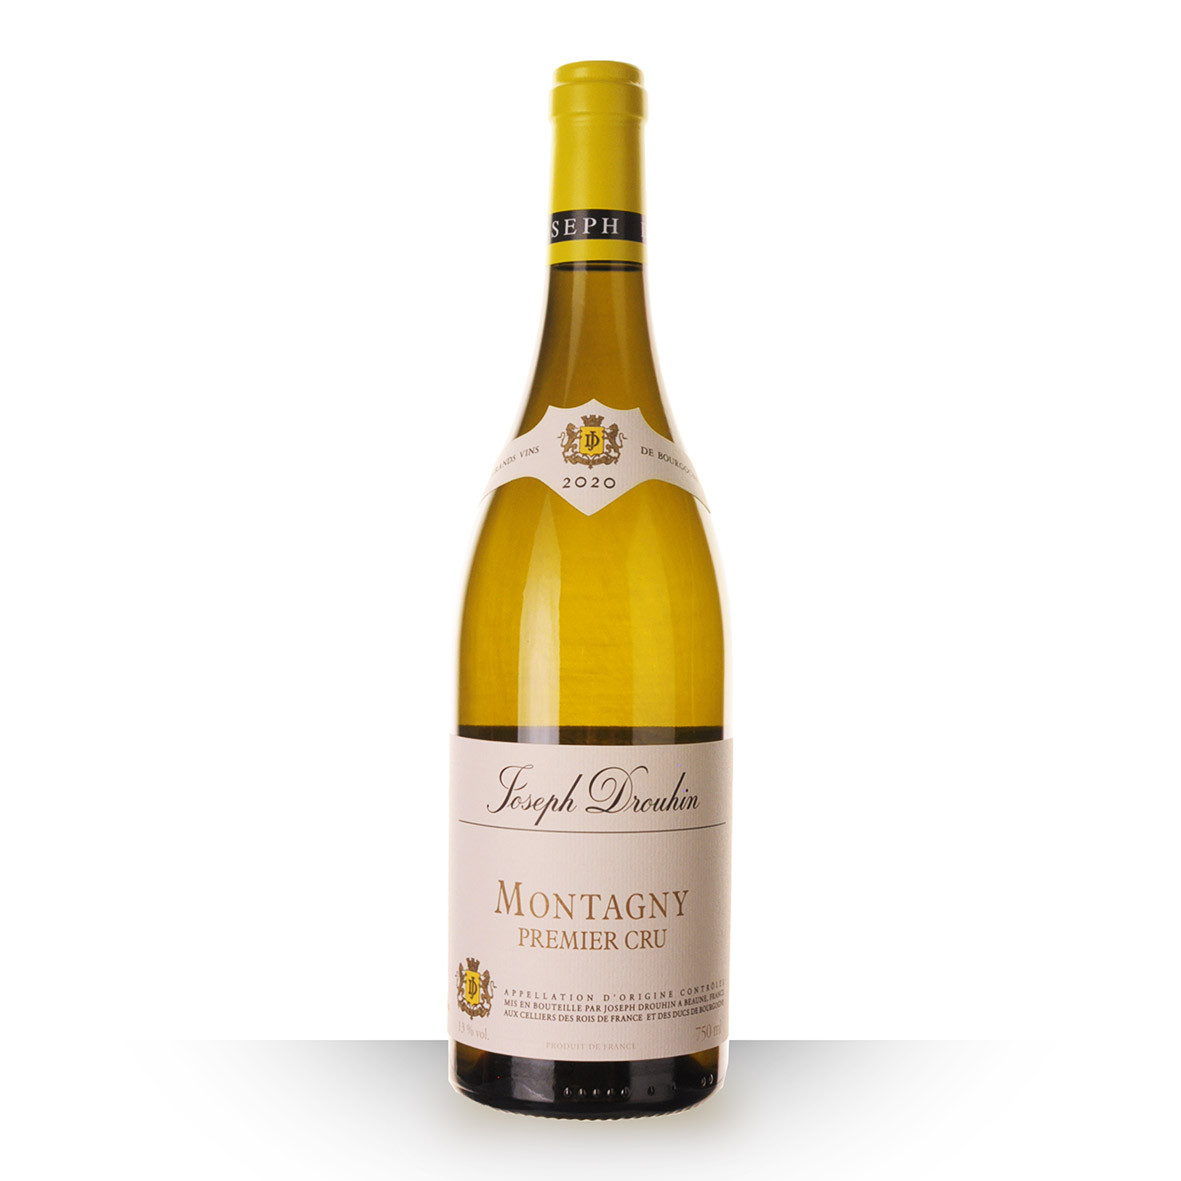 Joseph Drouhin Montagny 1er Cru Blanc 2020 75cl www.odyssee-vins.com